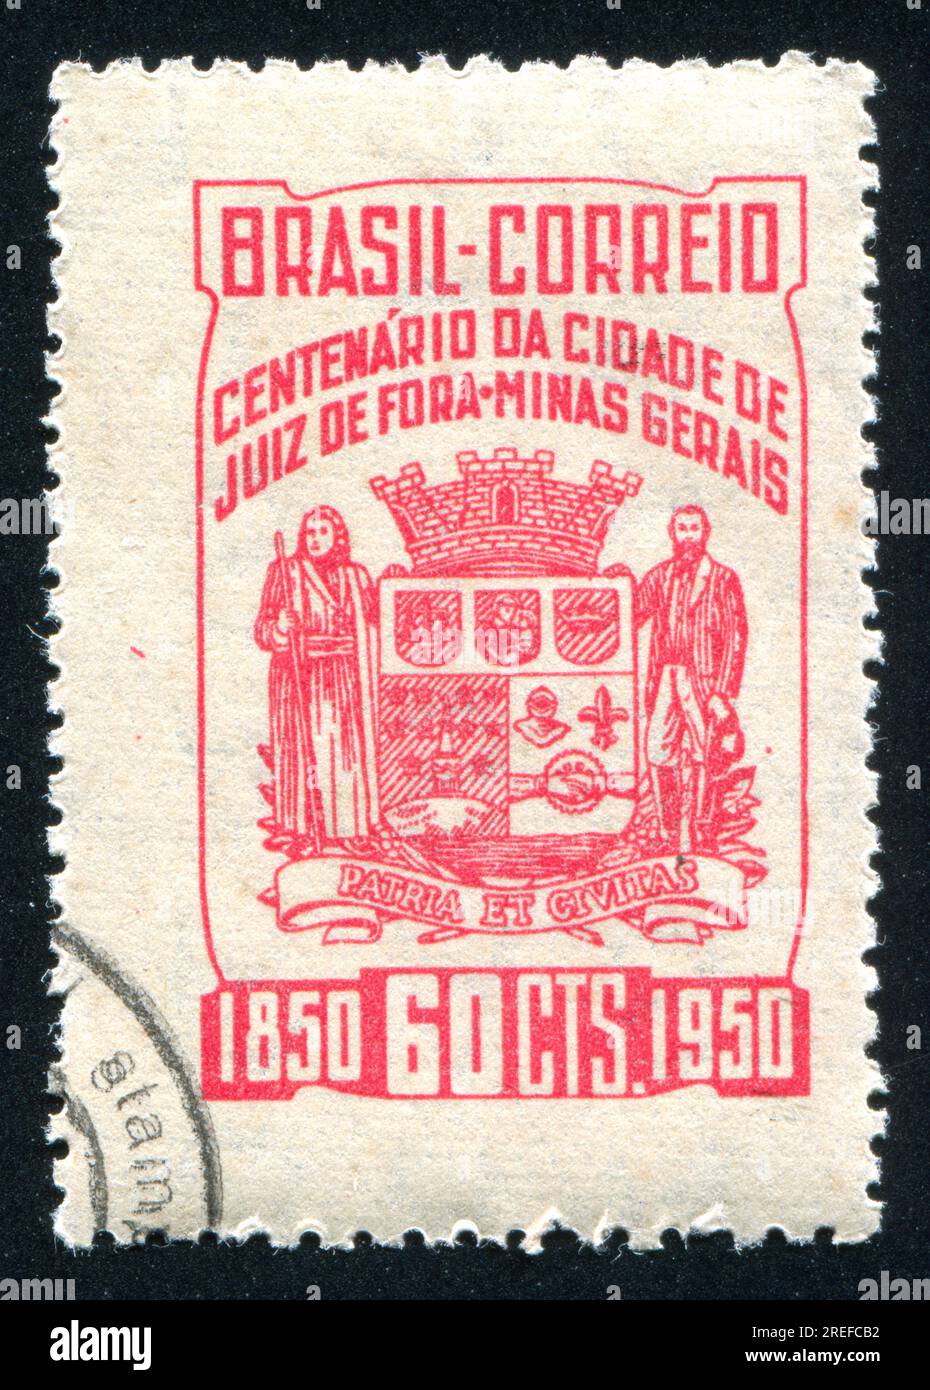 BRAZIL - CIRCA 1950: stamp printed by Brazil, shows Arms of Juiz de Fora,  circa 1950 Stock Photo - Alamy